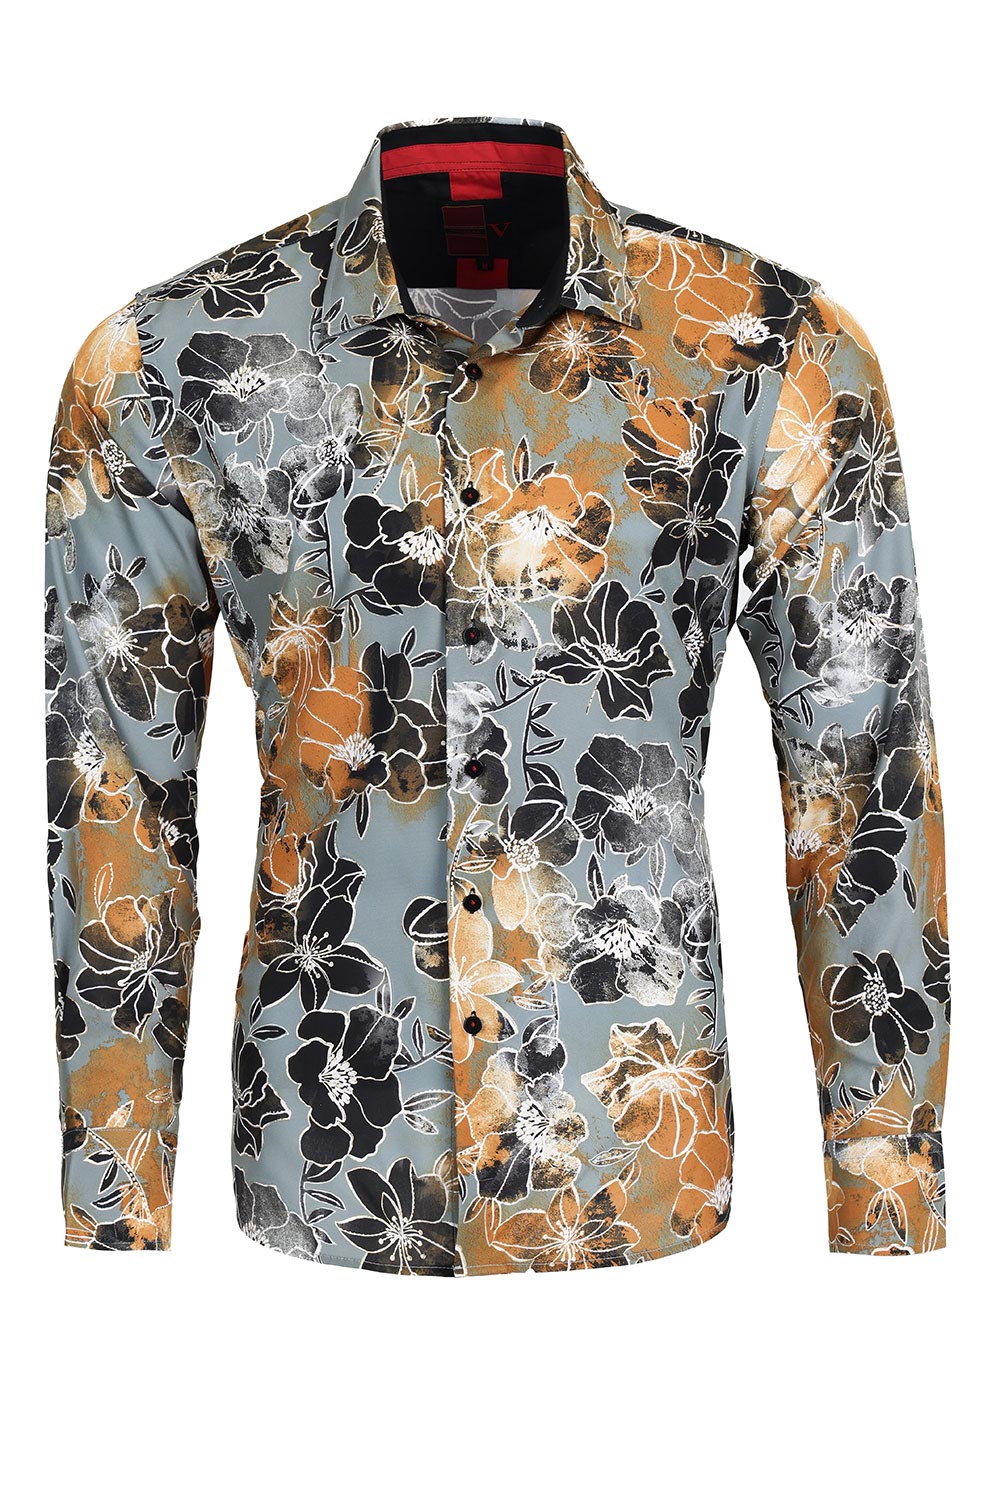 Vassari Men's Roses Print Design Button Down Luxury Shirts 2VS119 Gold